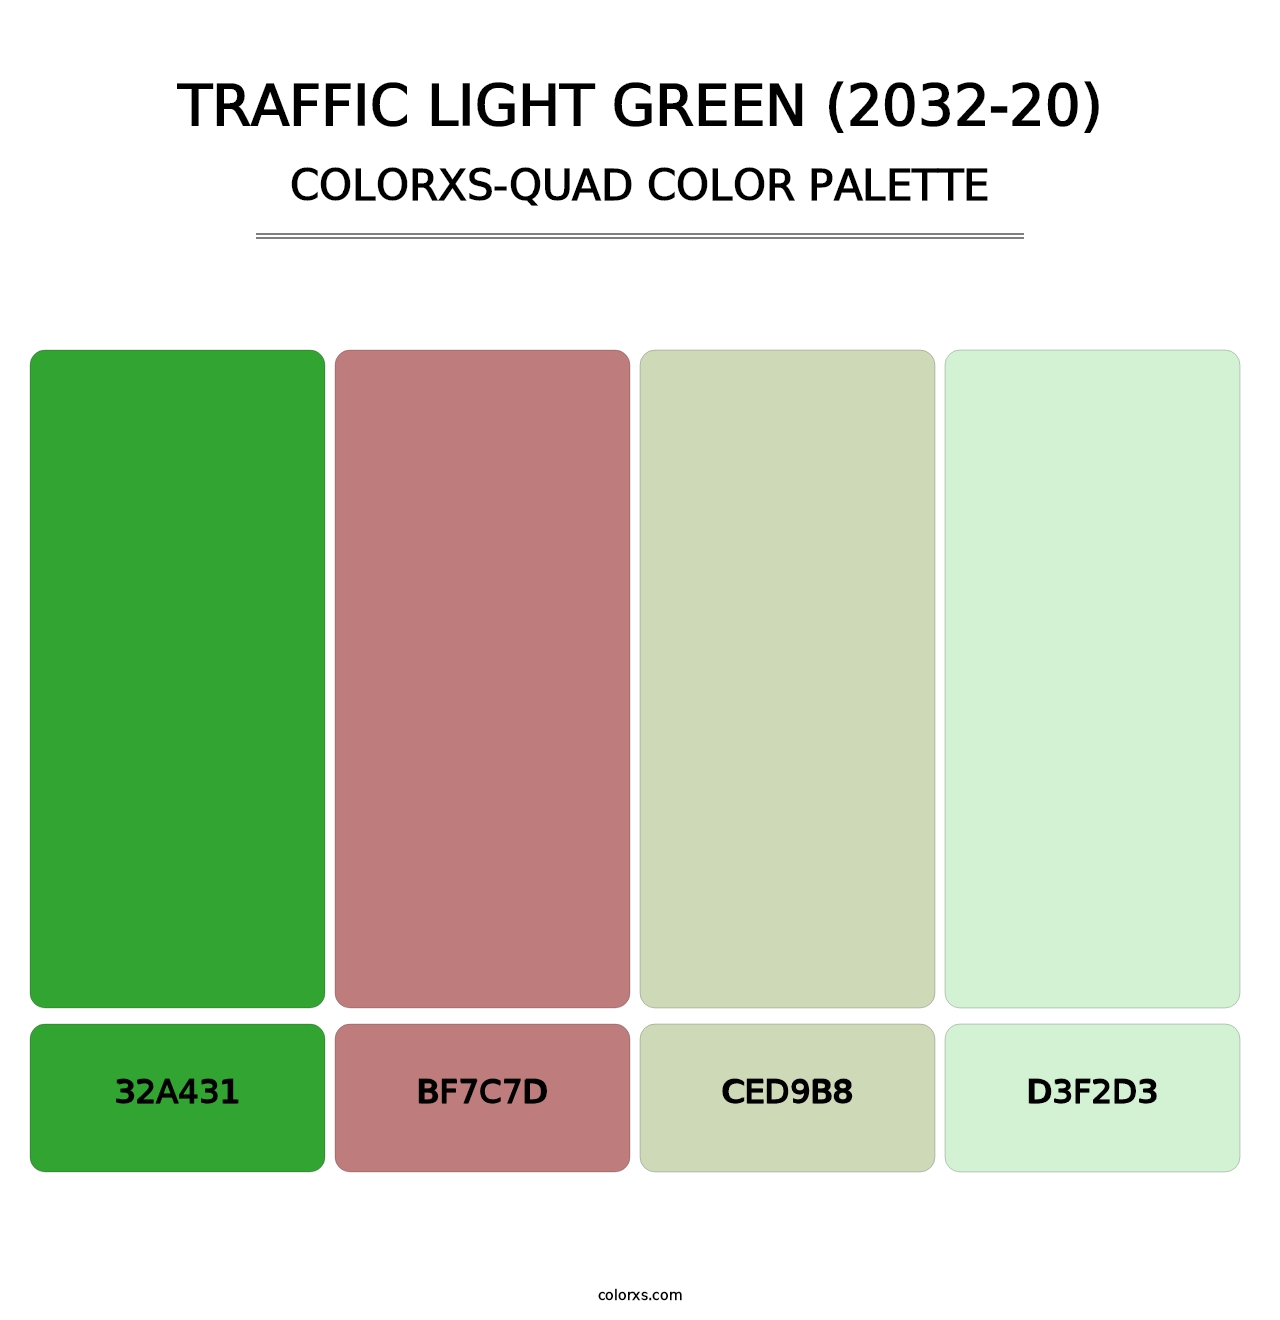 Traffic Light Green (2032-20) - Colorxs Quad Palette